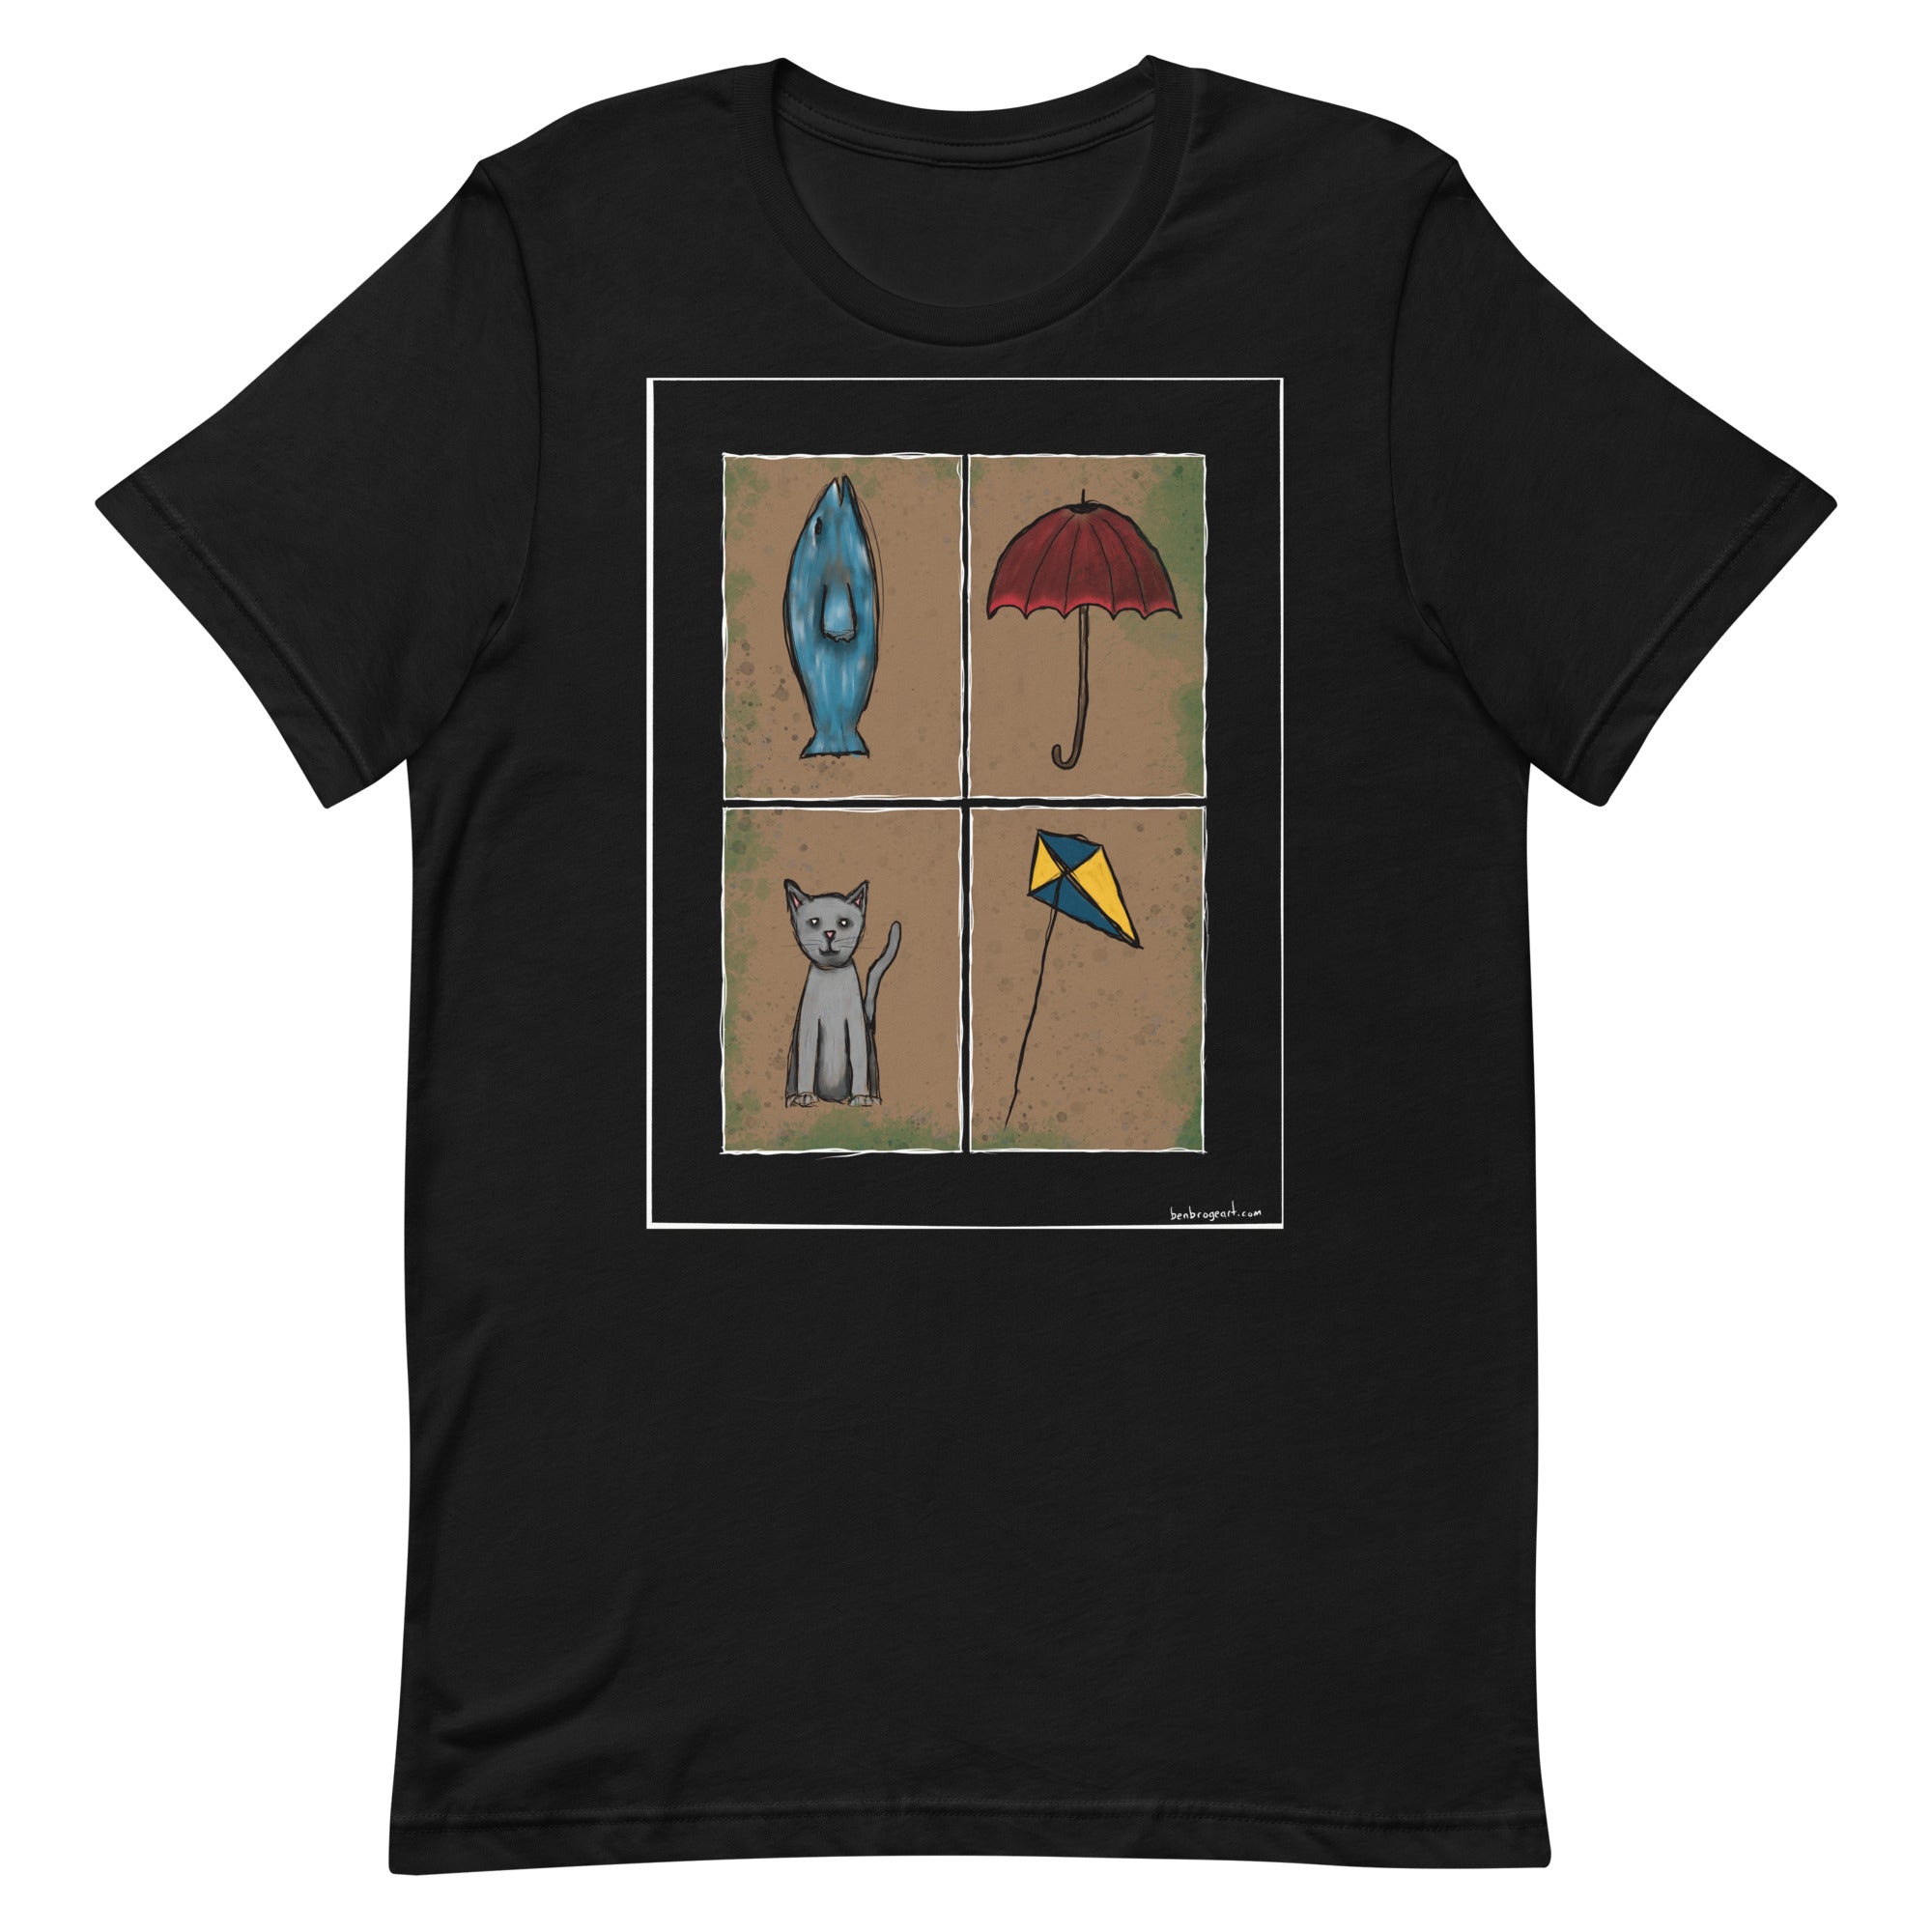 Fish, umbrella, cat, kite t-shirt